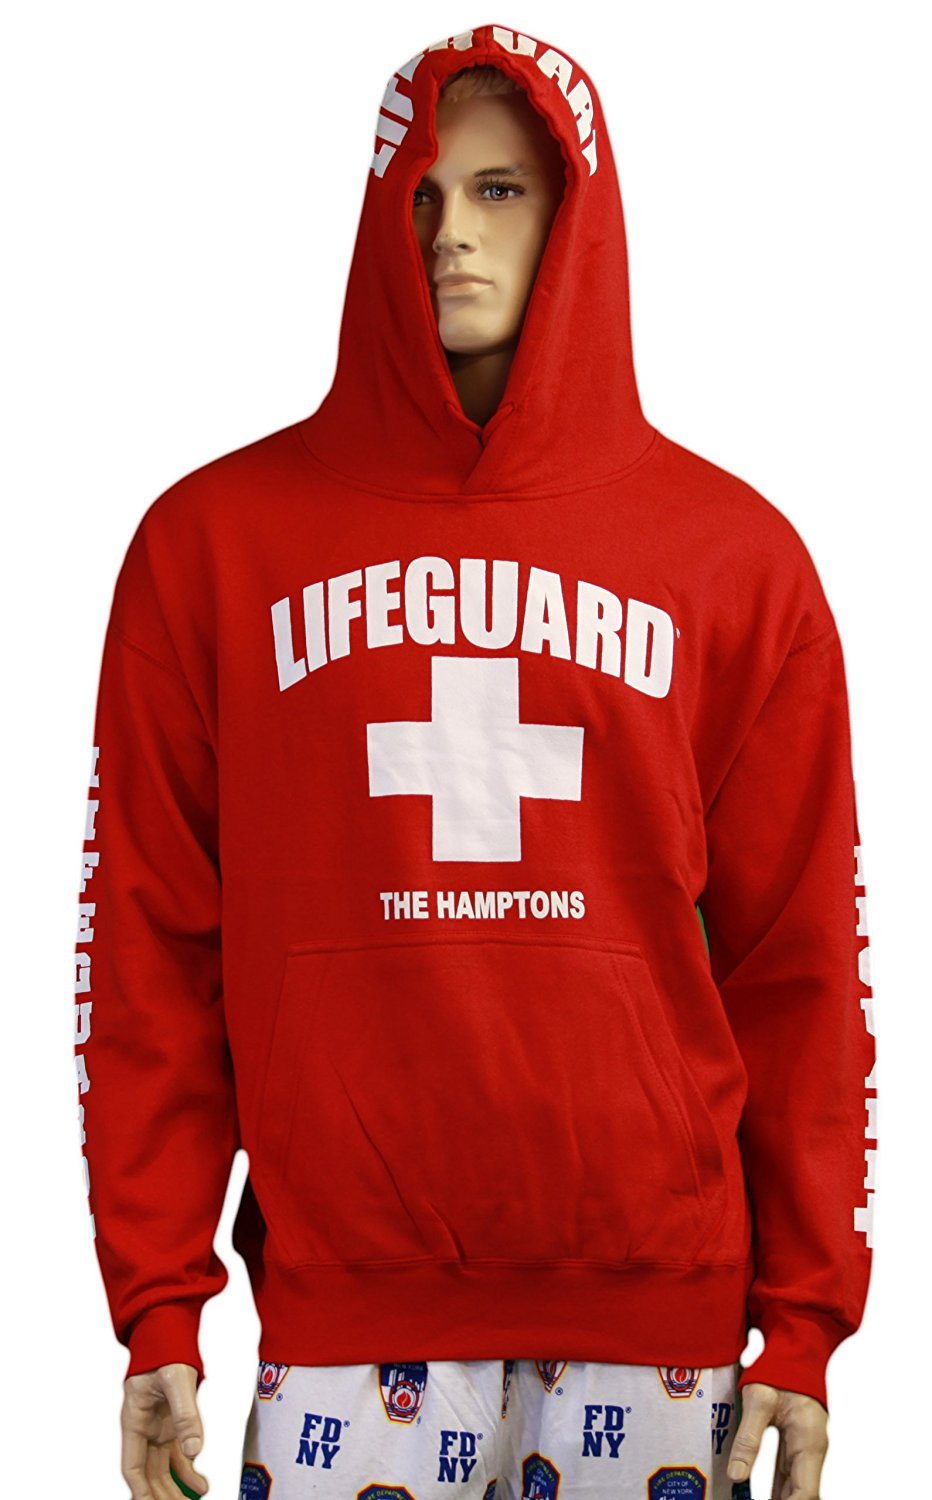 Lifeguard Kids The Hamptons NY Life Guard Sweatshirt Red